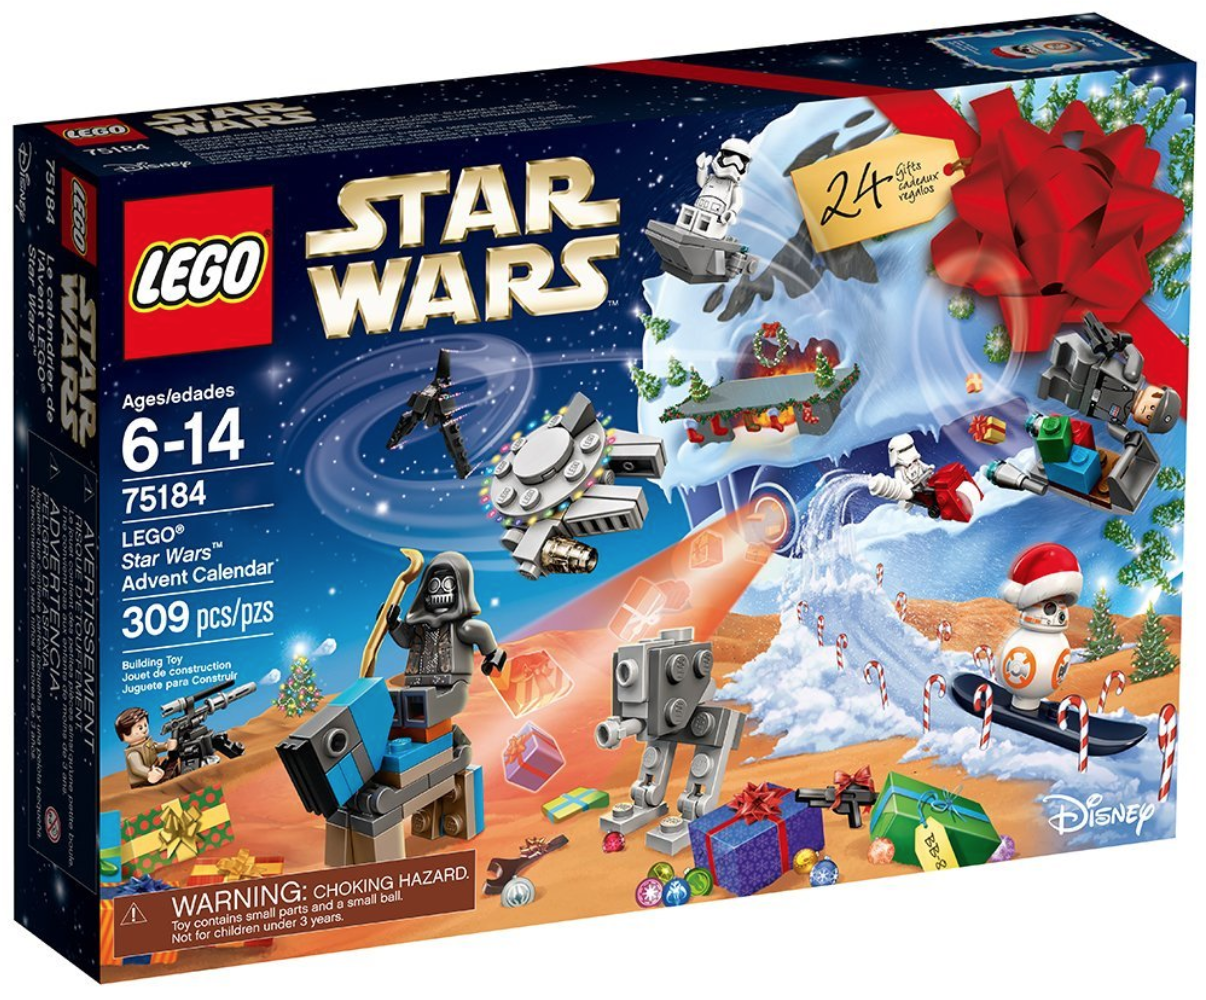 Rare Discount on LEGO Star Wars Advent Calendar 75184 Building Kit (309 Piece) -- $34.76 (reg. $39.99), BEST Price!